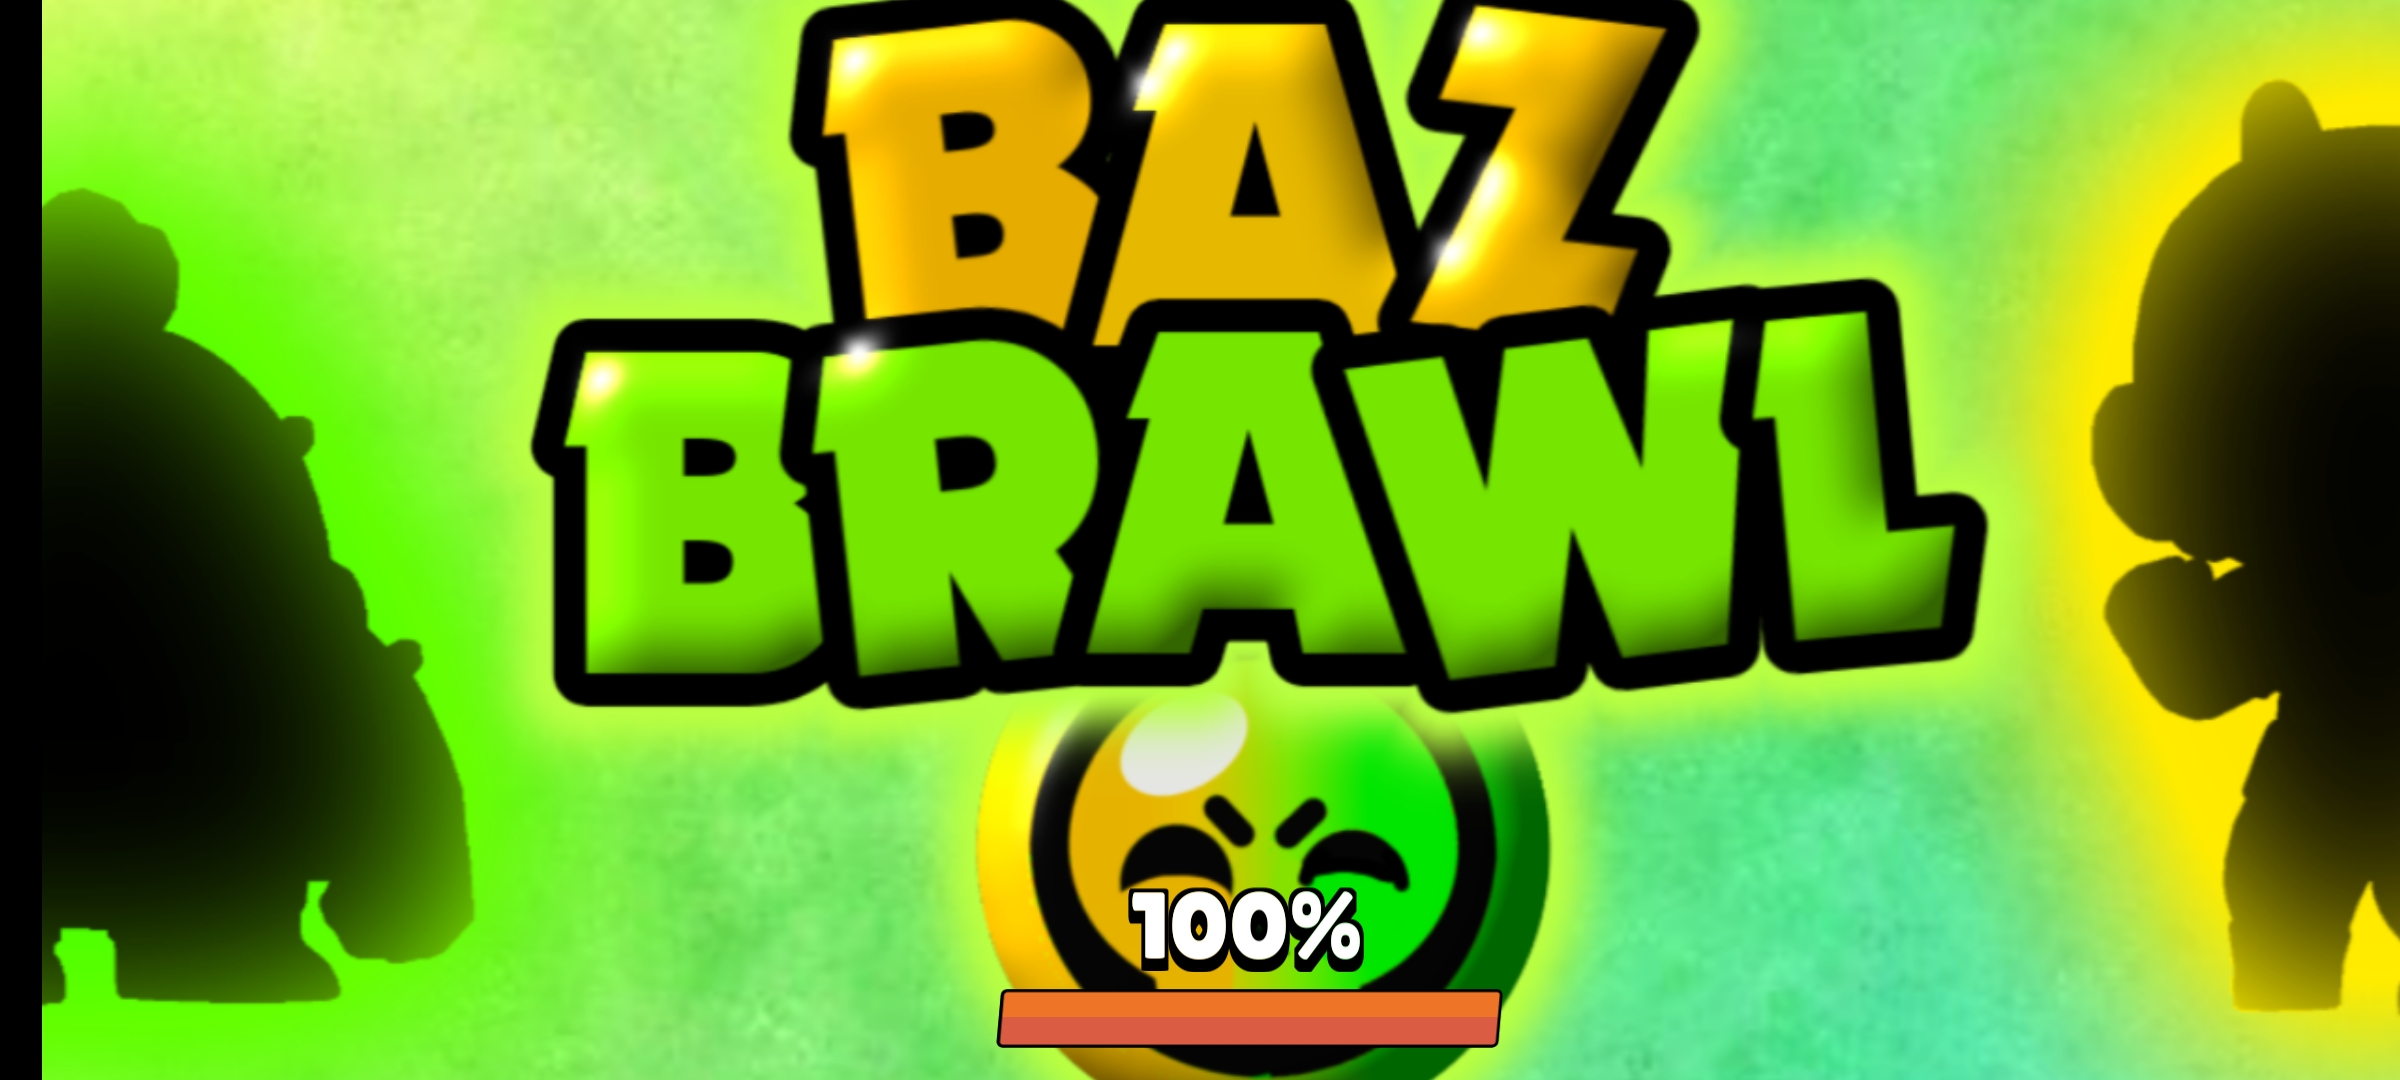 BAZ Brawl Remastered